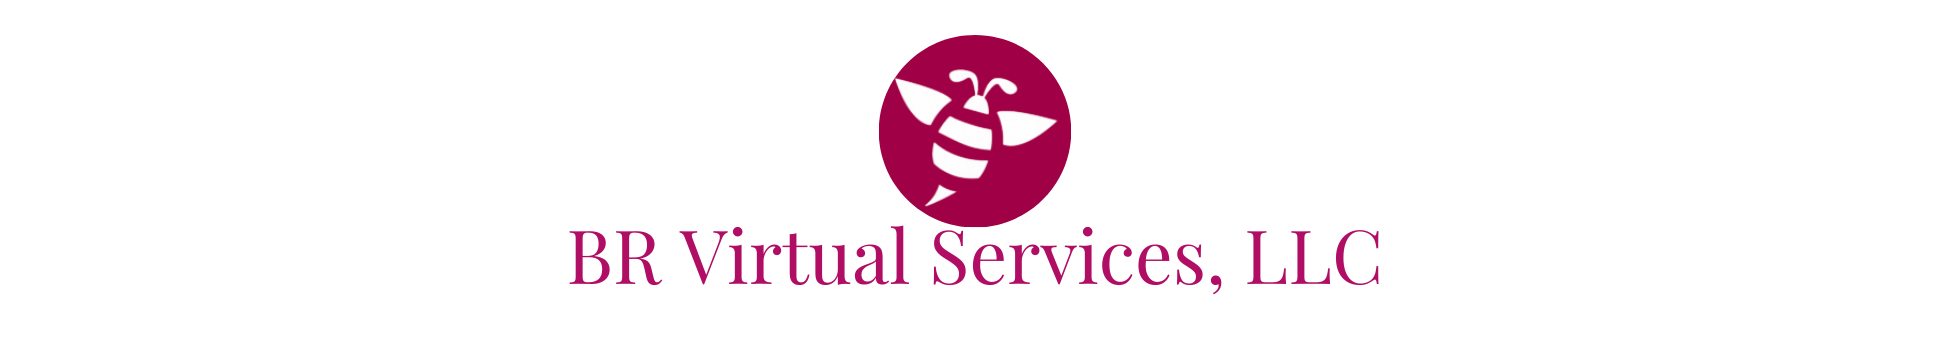 BR Virtual Services, LLC